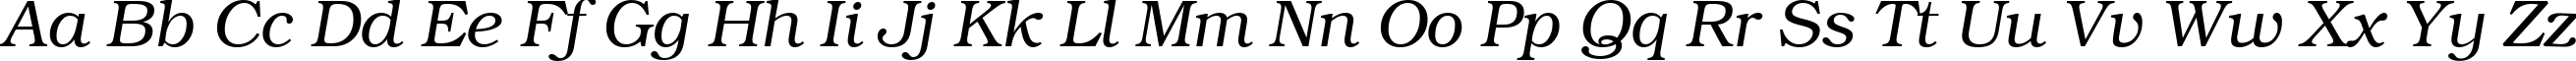 Пример написания английского алфавита шрифтом ITC Bookman Light Italic